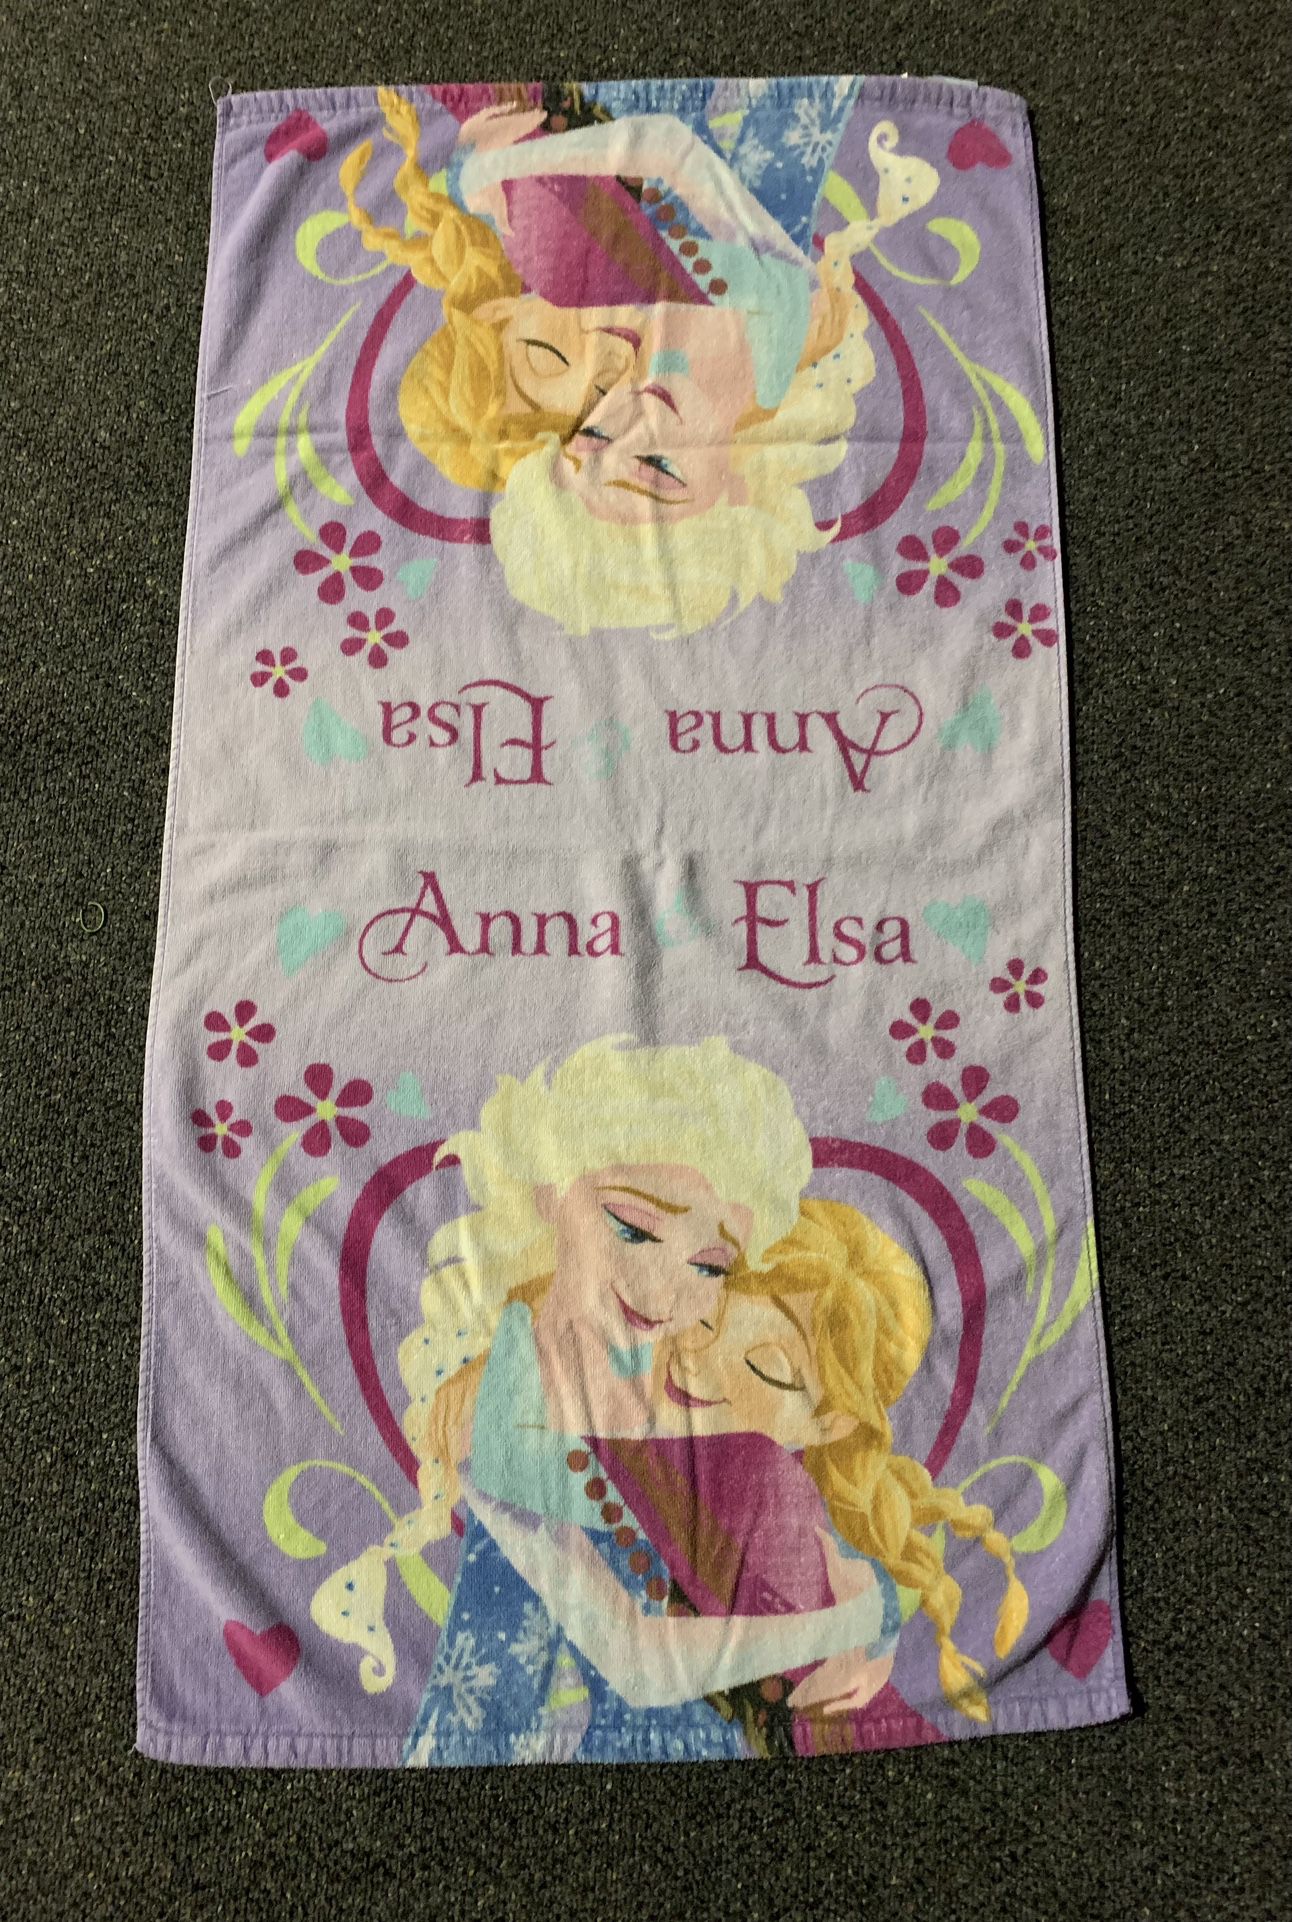 Disney Frozen Anna and Elsa 45" x 24" beach towel 